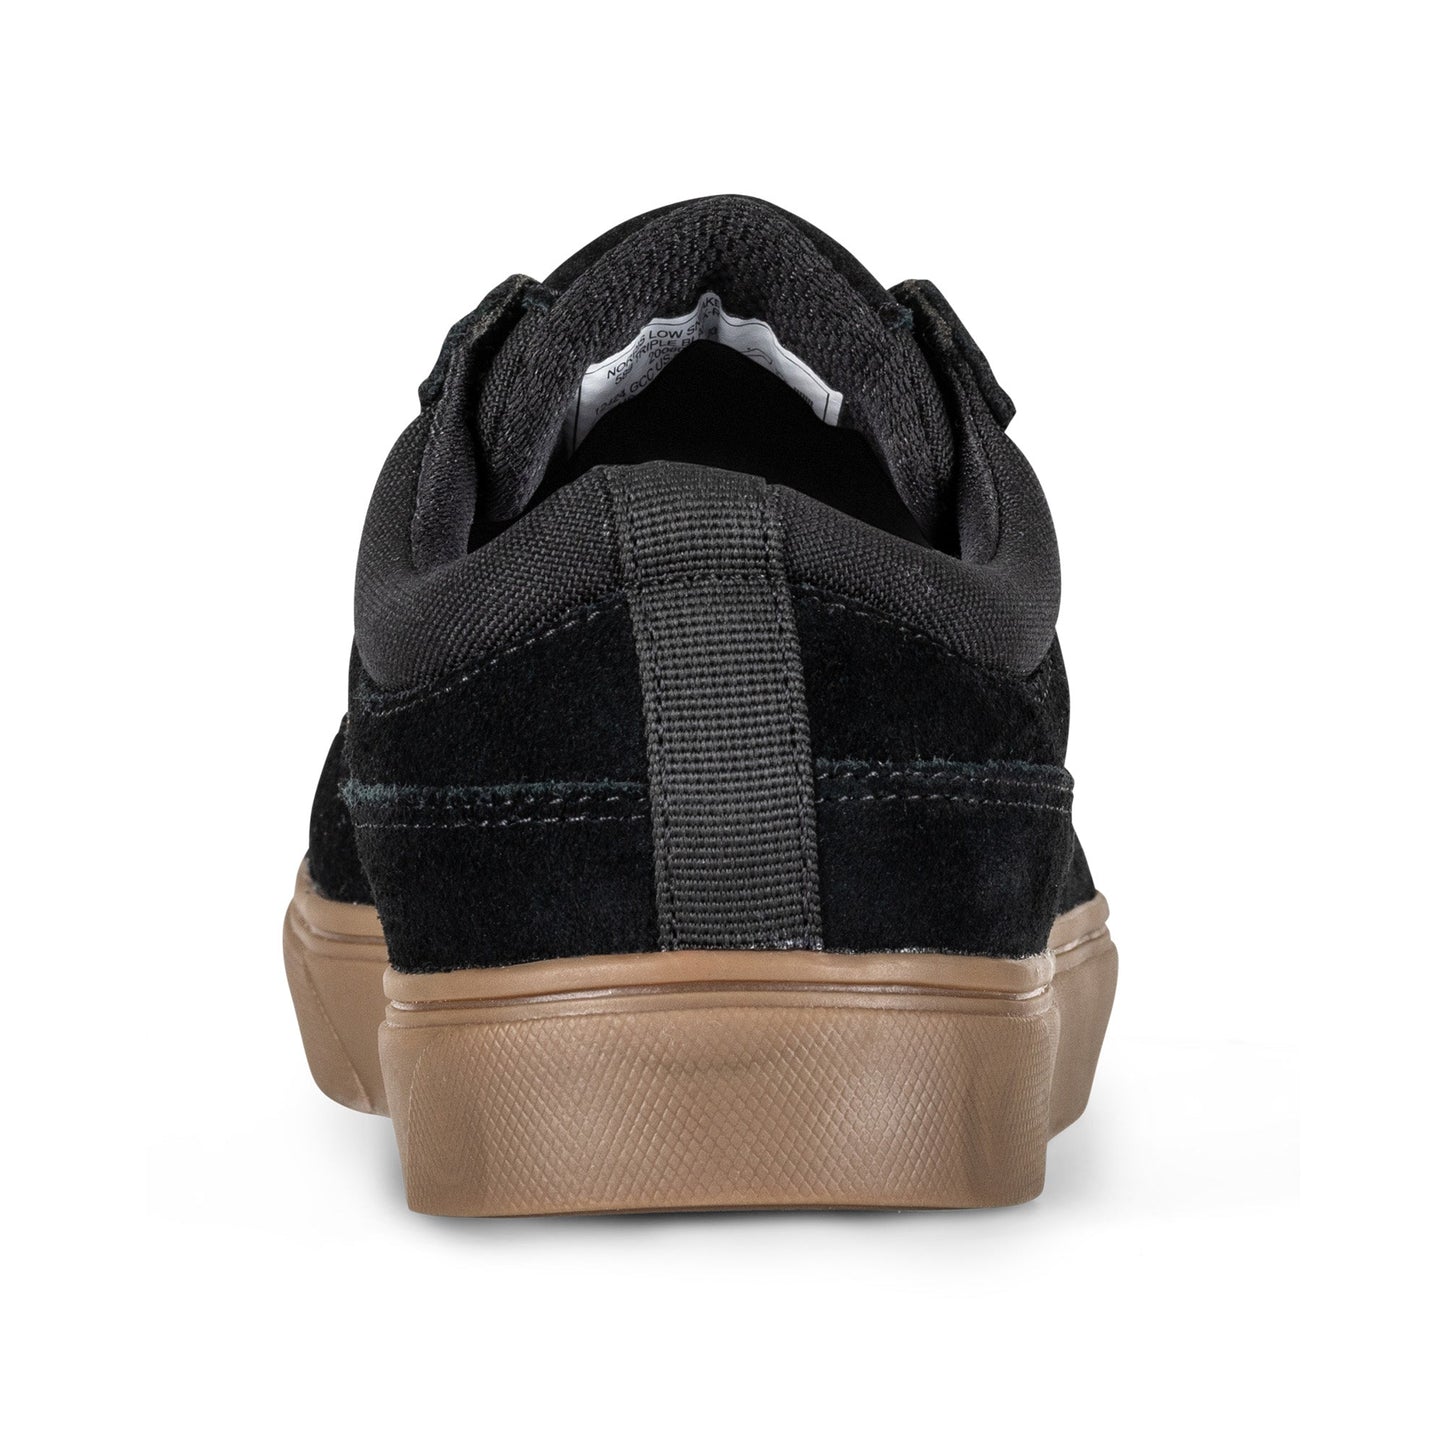 5.11 Tactical Norris Sneaker Low Black/Gum Tactical Distributors Ltd New Zealand